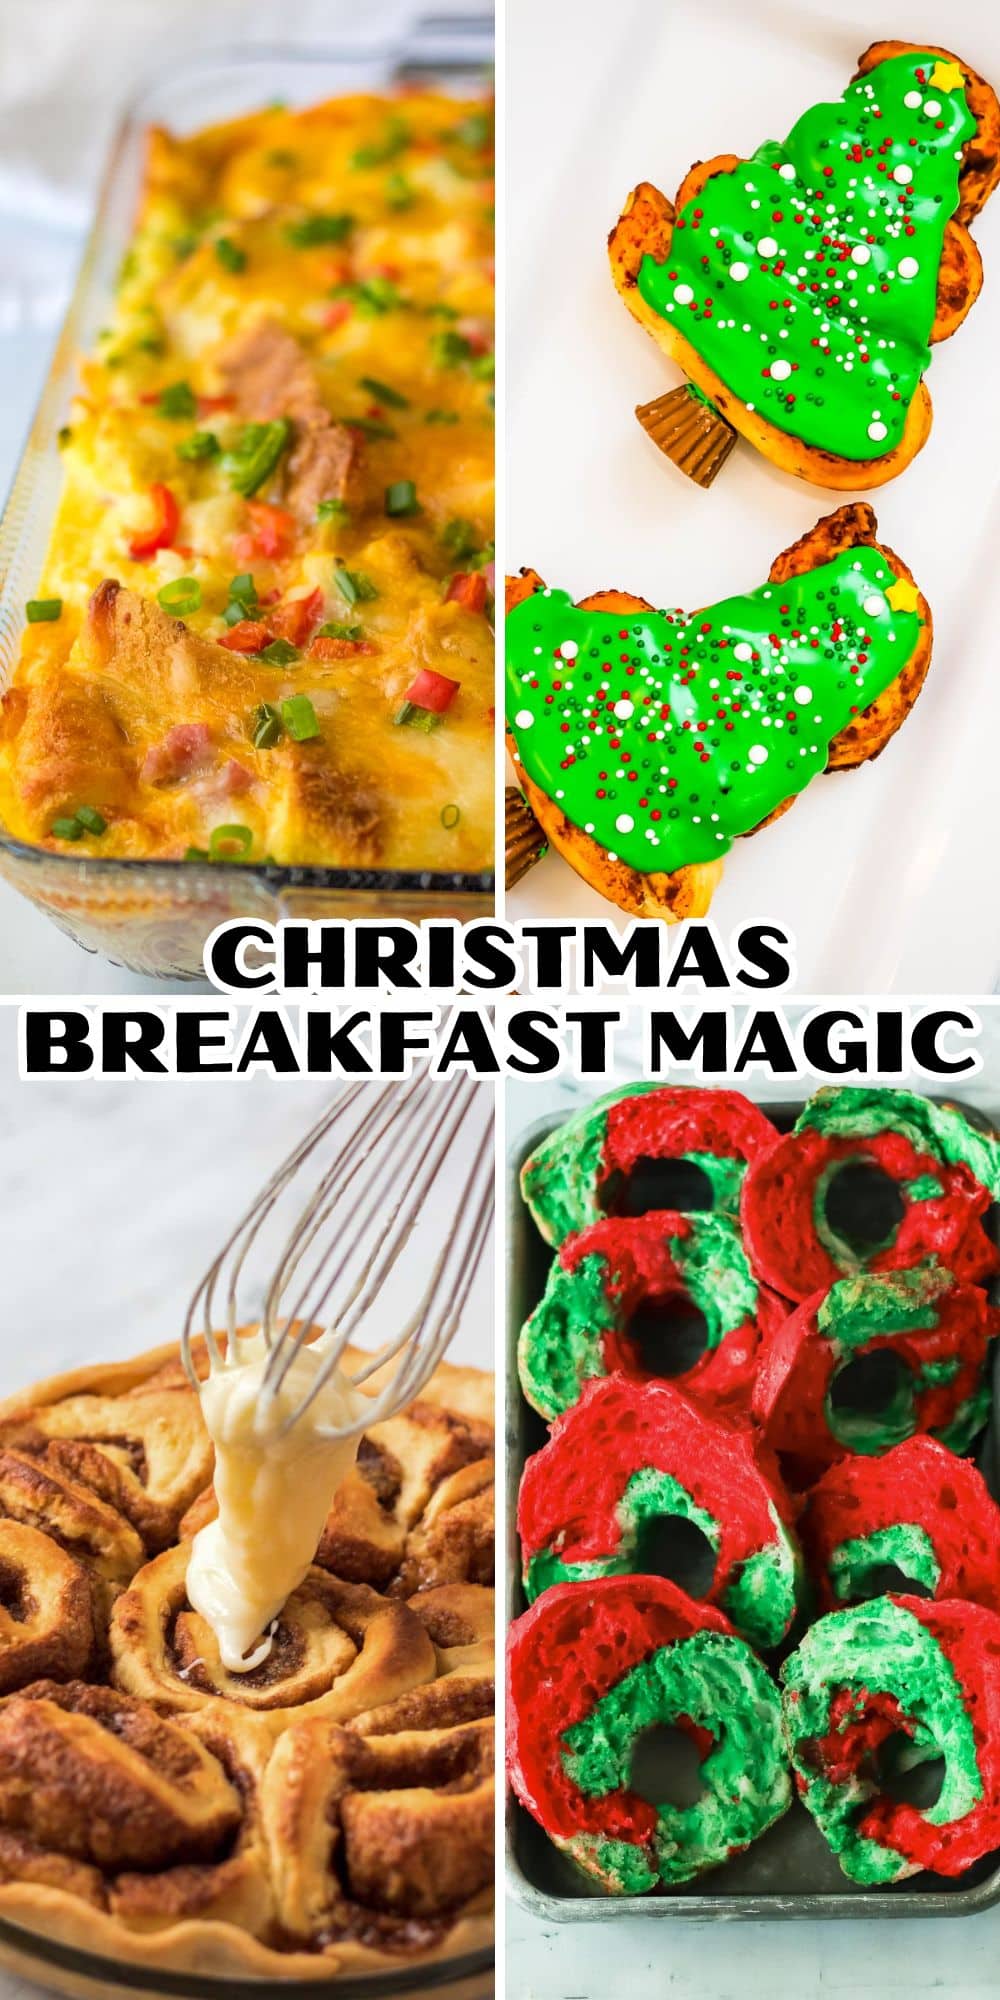 Christmas breakfast magic.